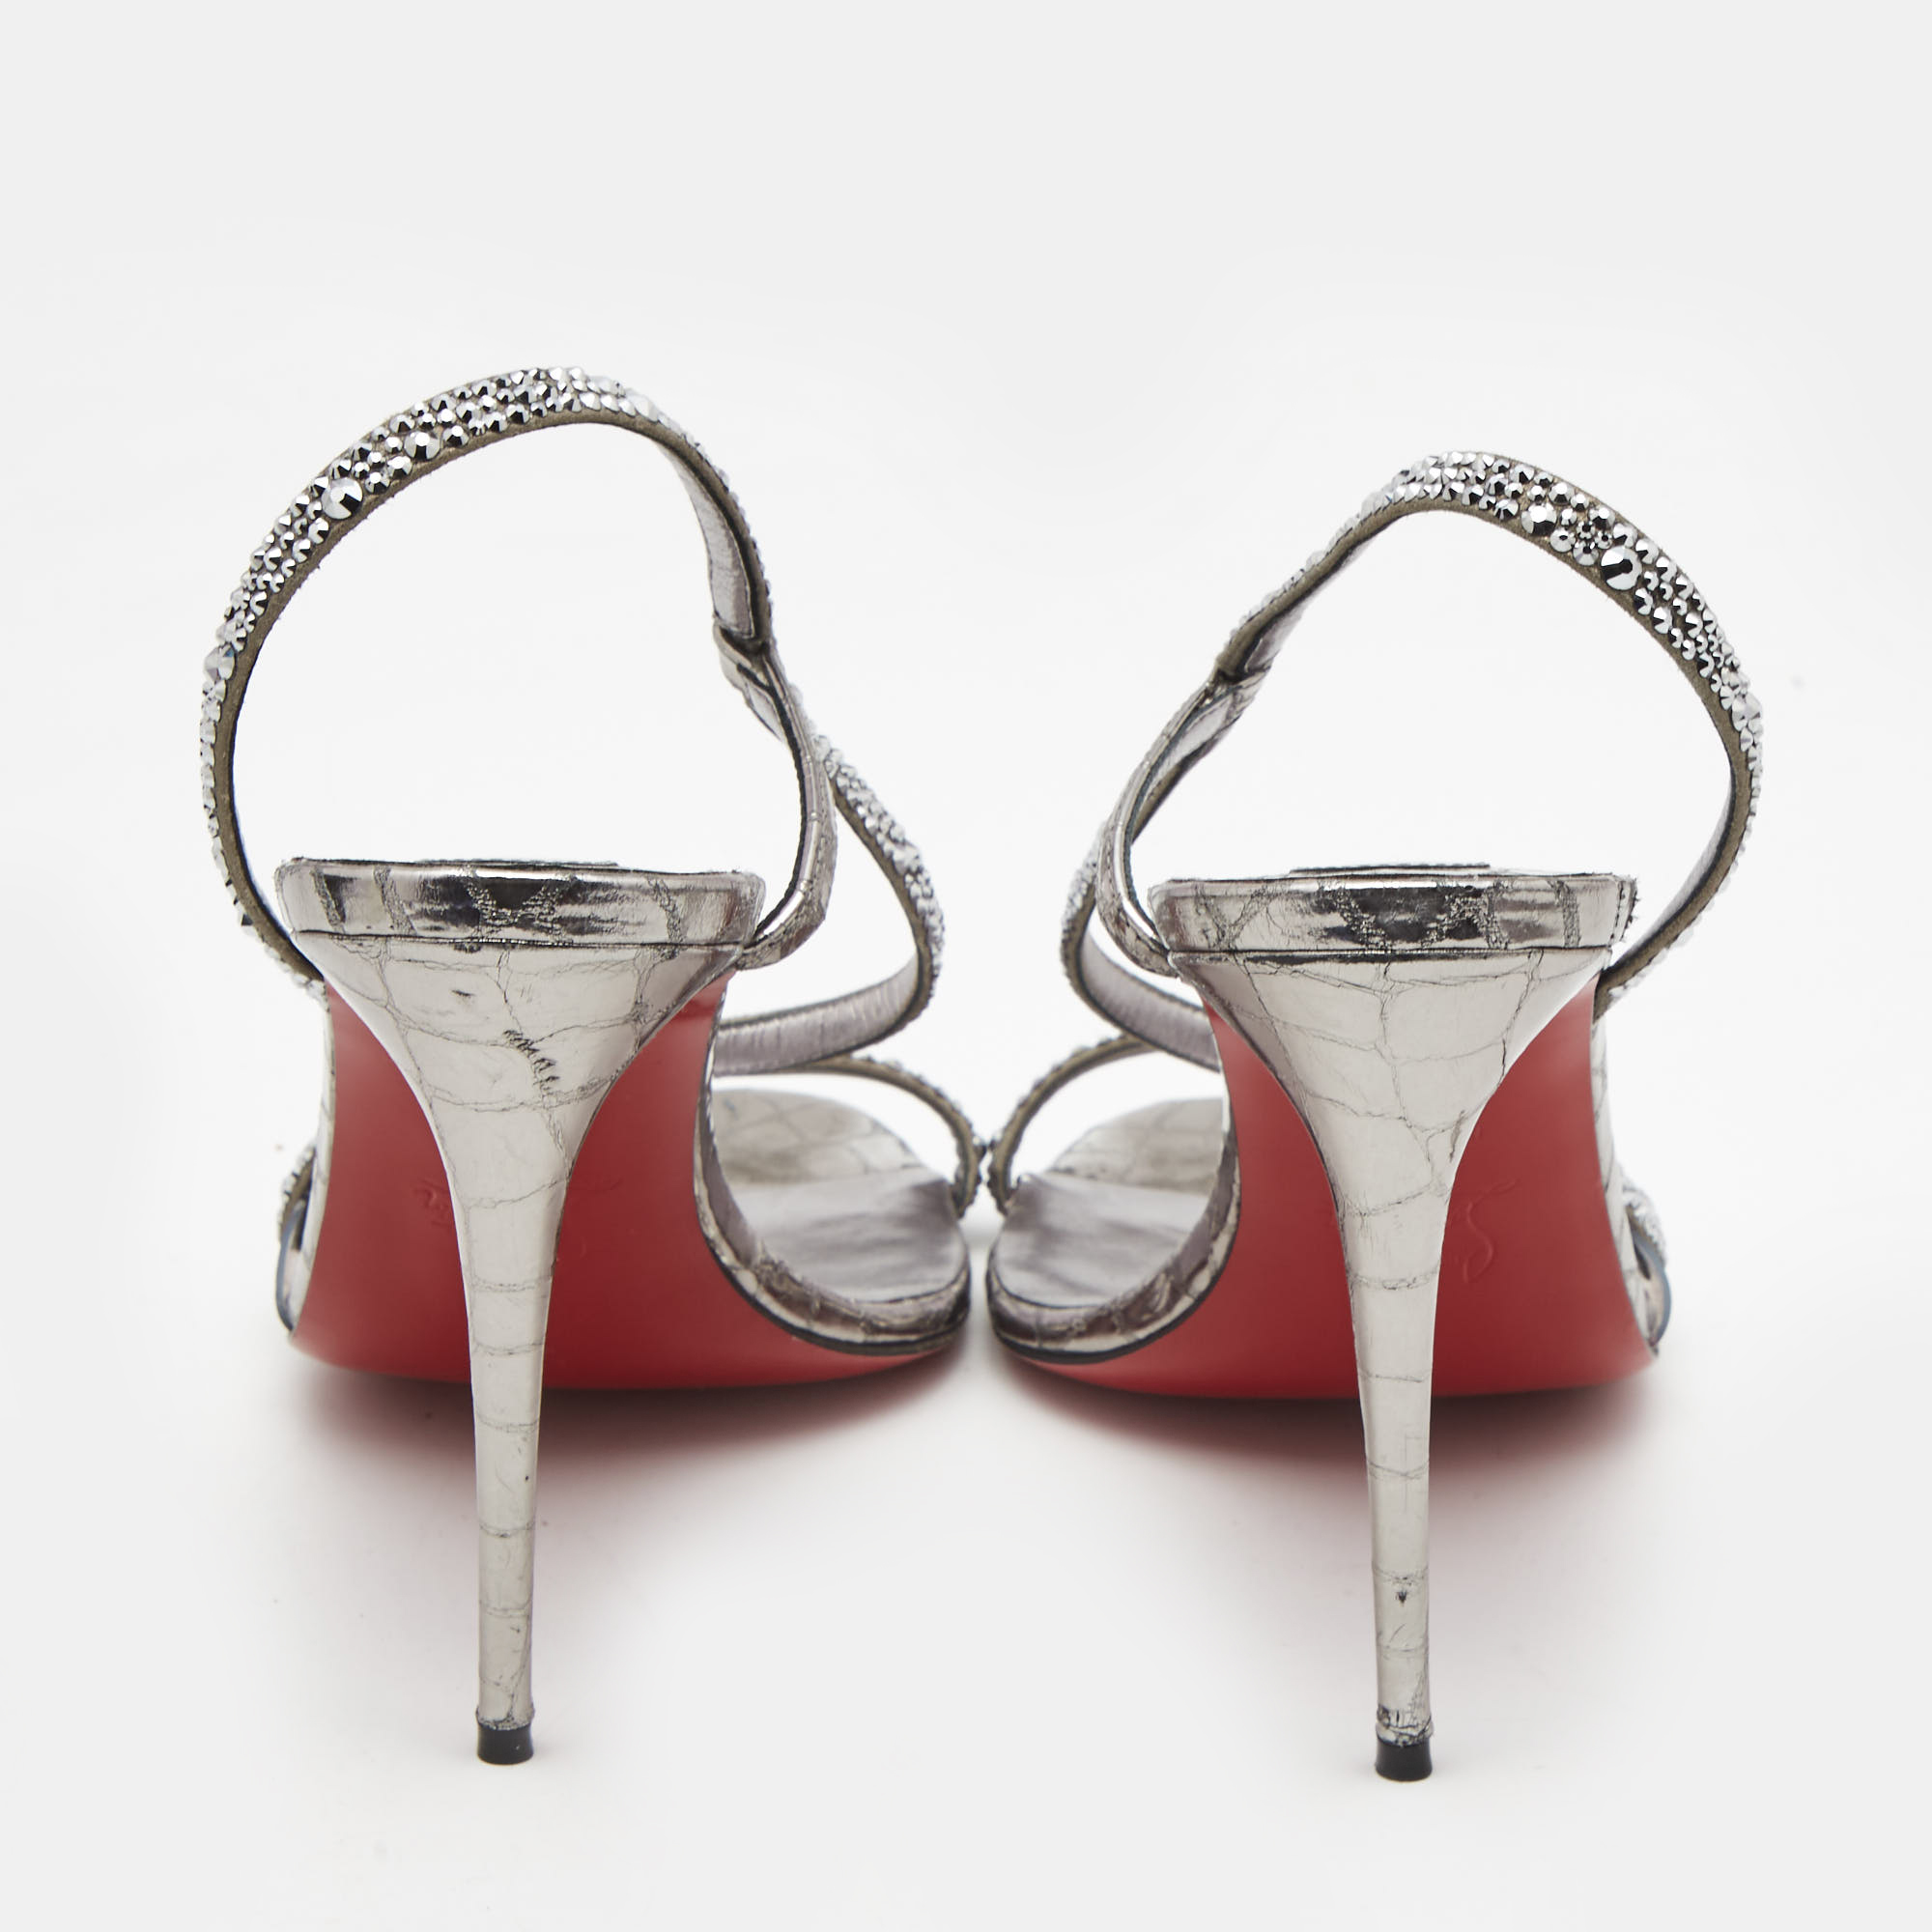 Christian Louboutin Metallic Grey Crystal Embellished Suede Rosalie Sandals Size 39.5